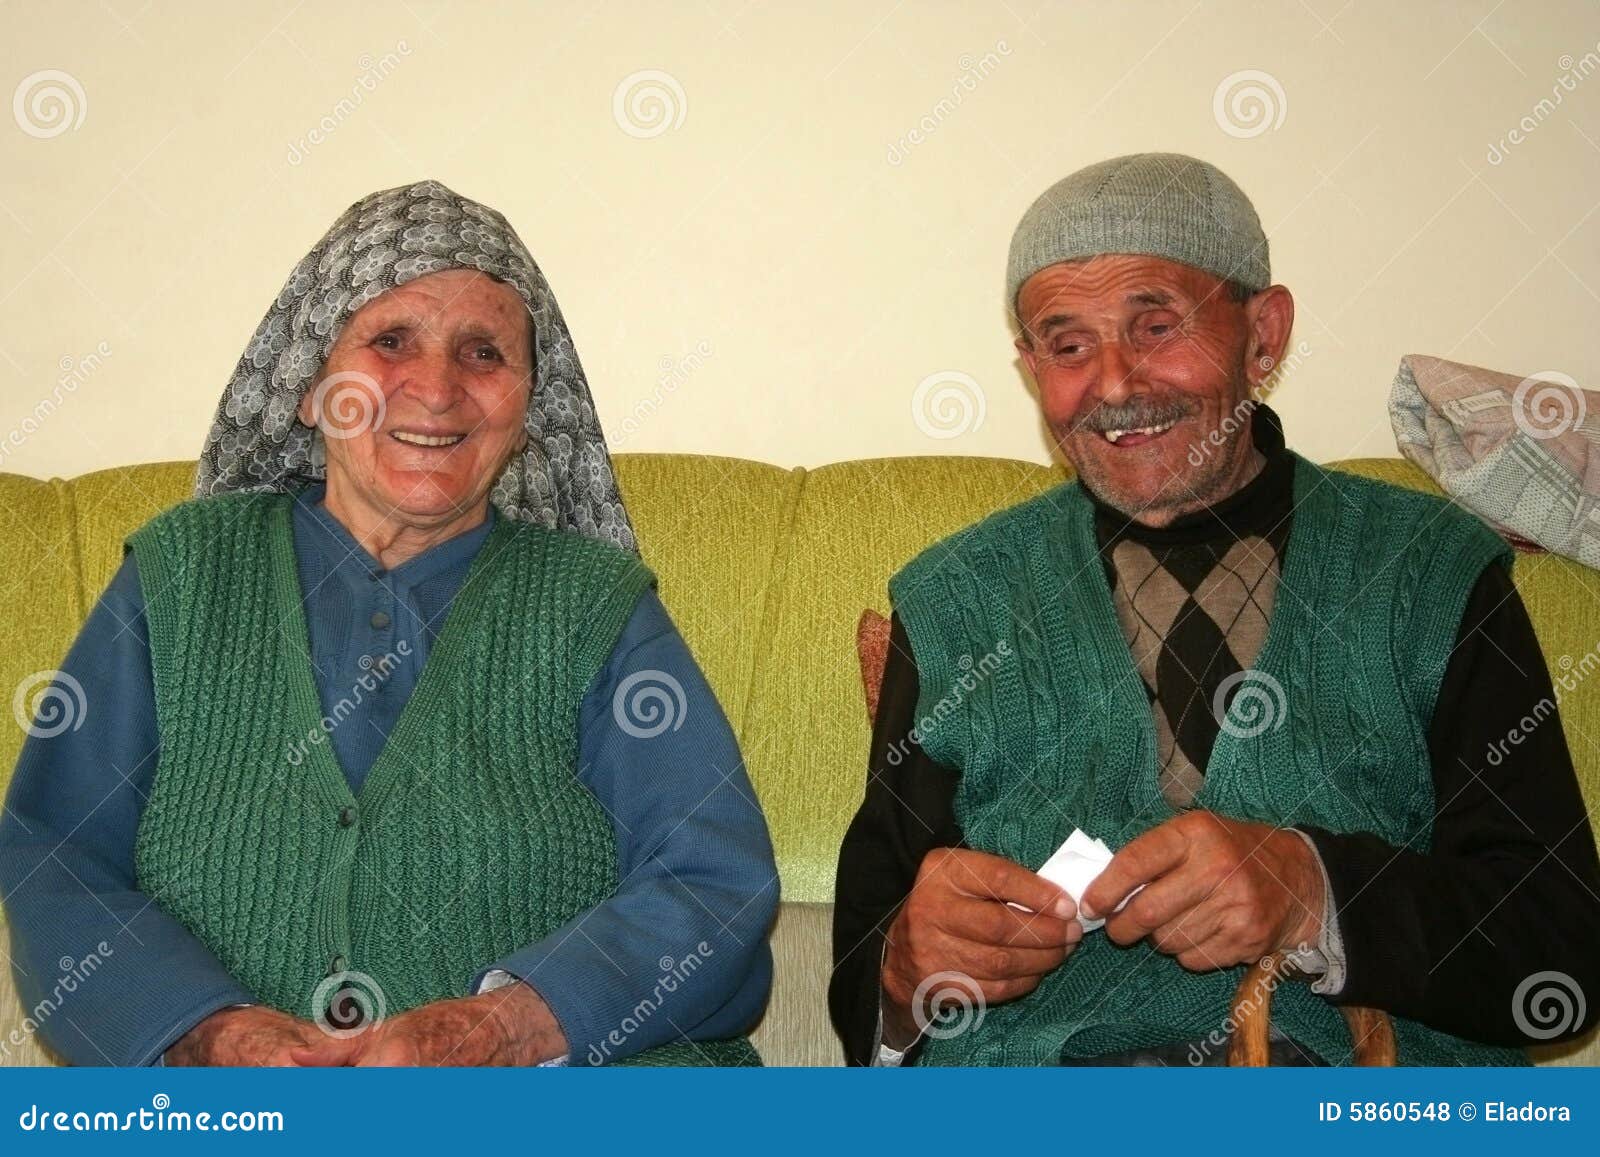 Old Muslim Couple Royalty Free Stock Photos Image 5860548